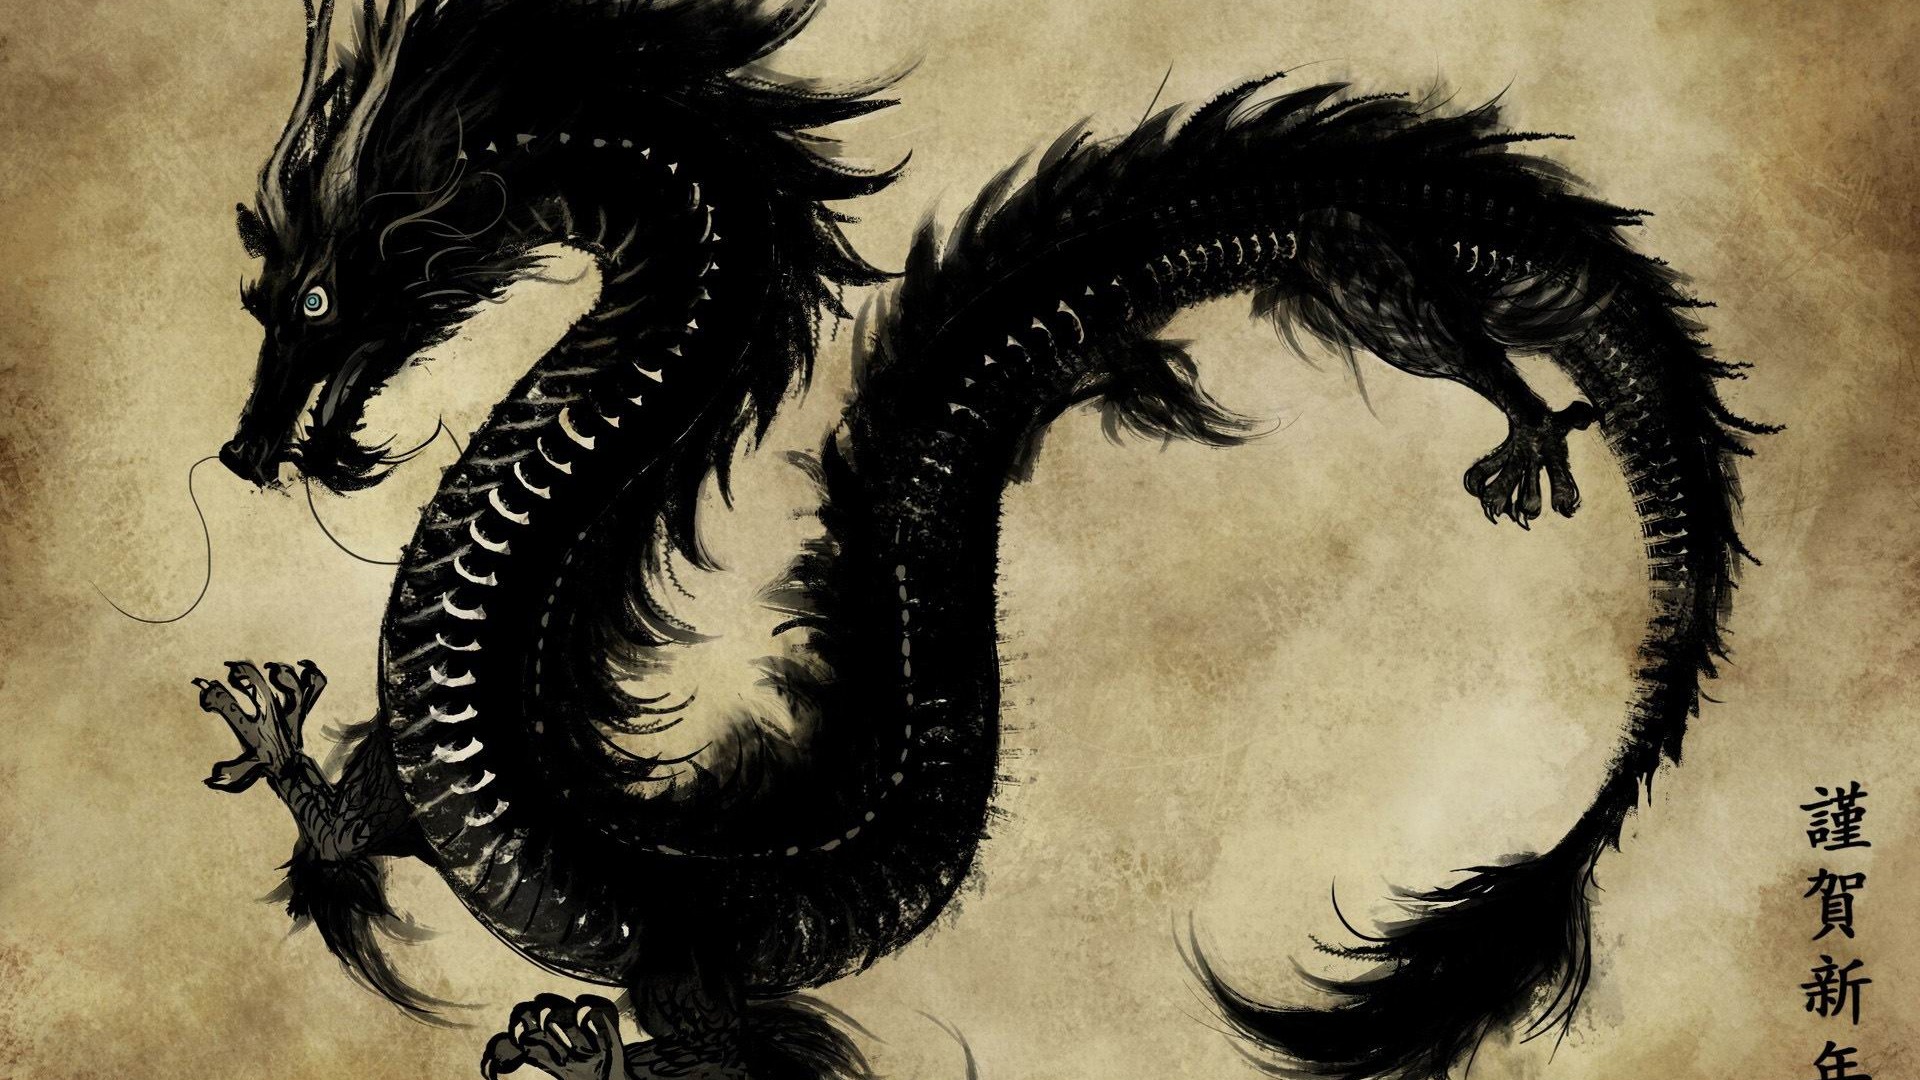 chinese black dragon Vintage style wallpaper   1920x1080 wallpaper